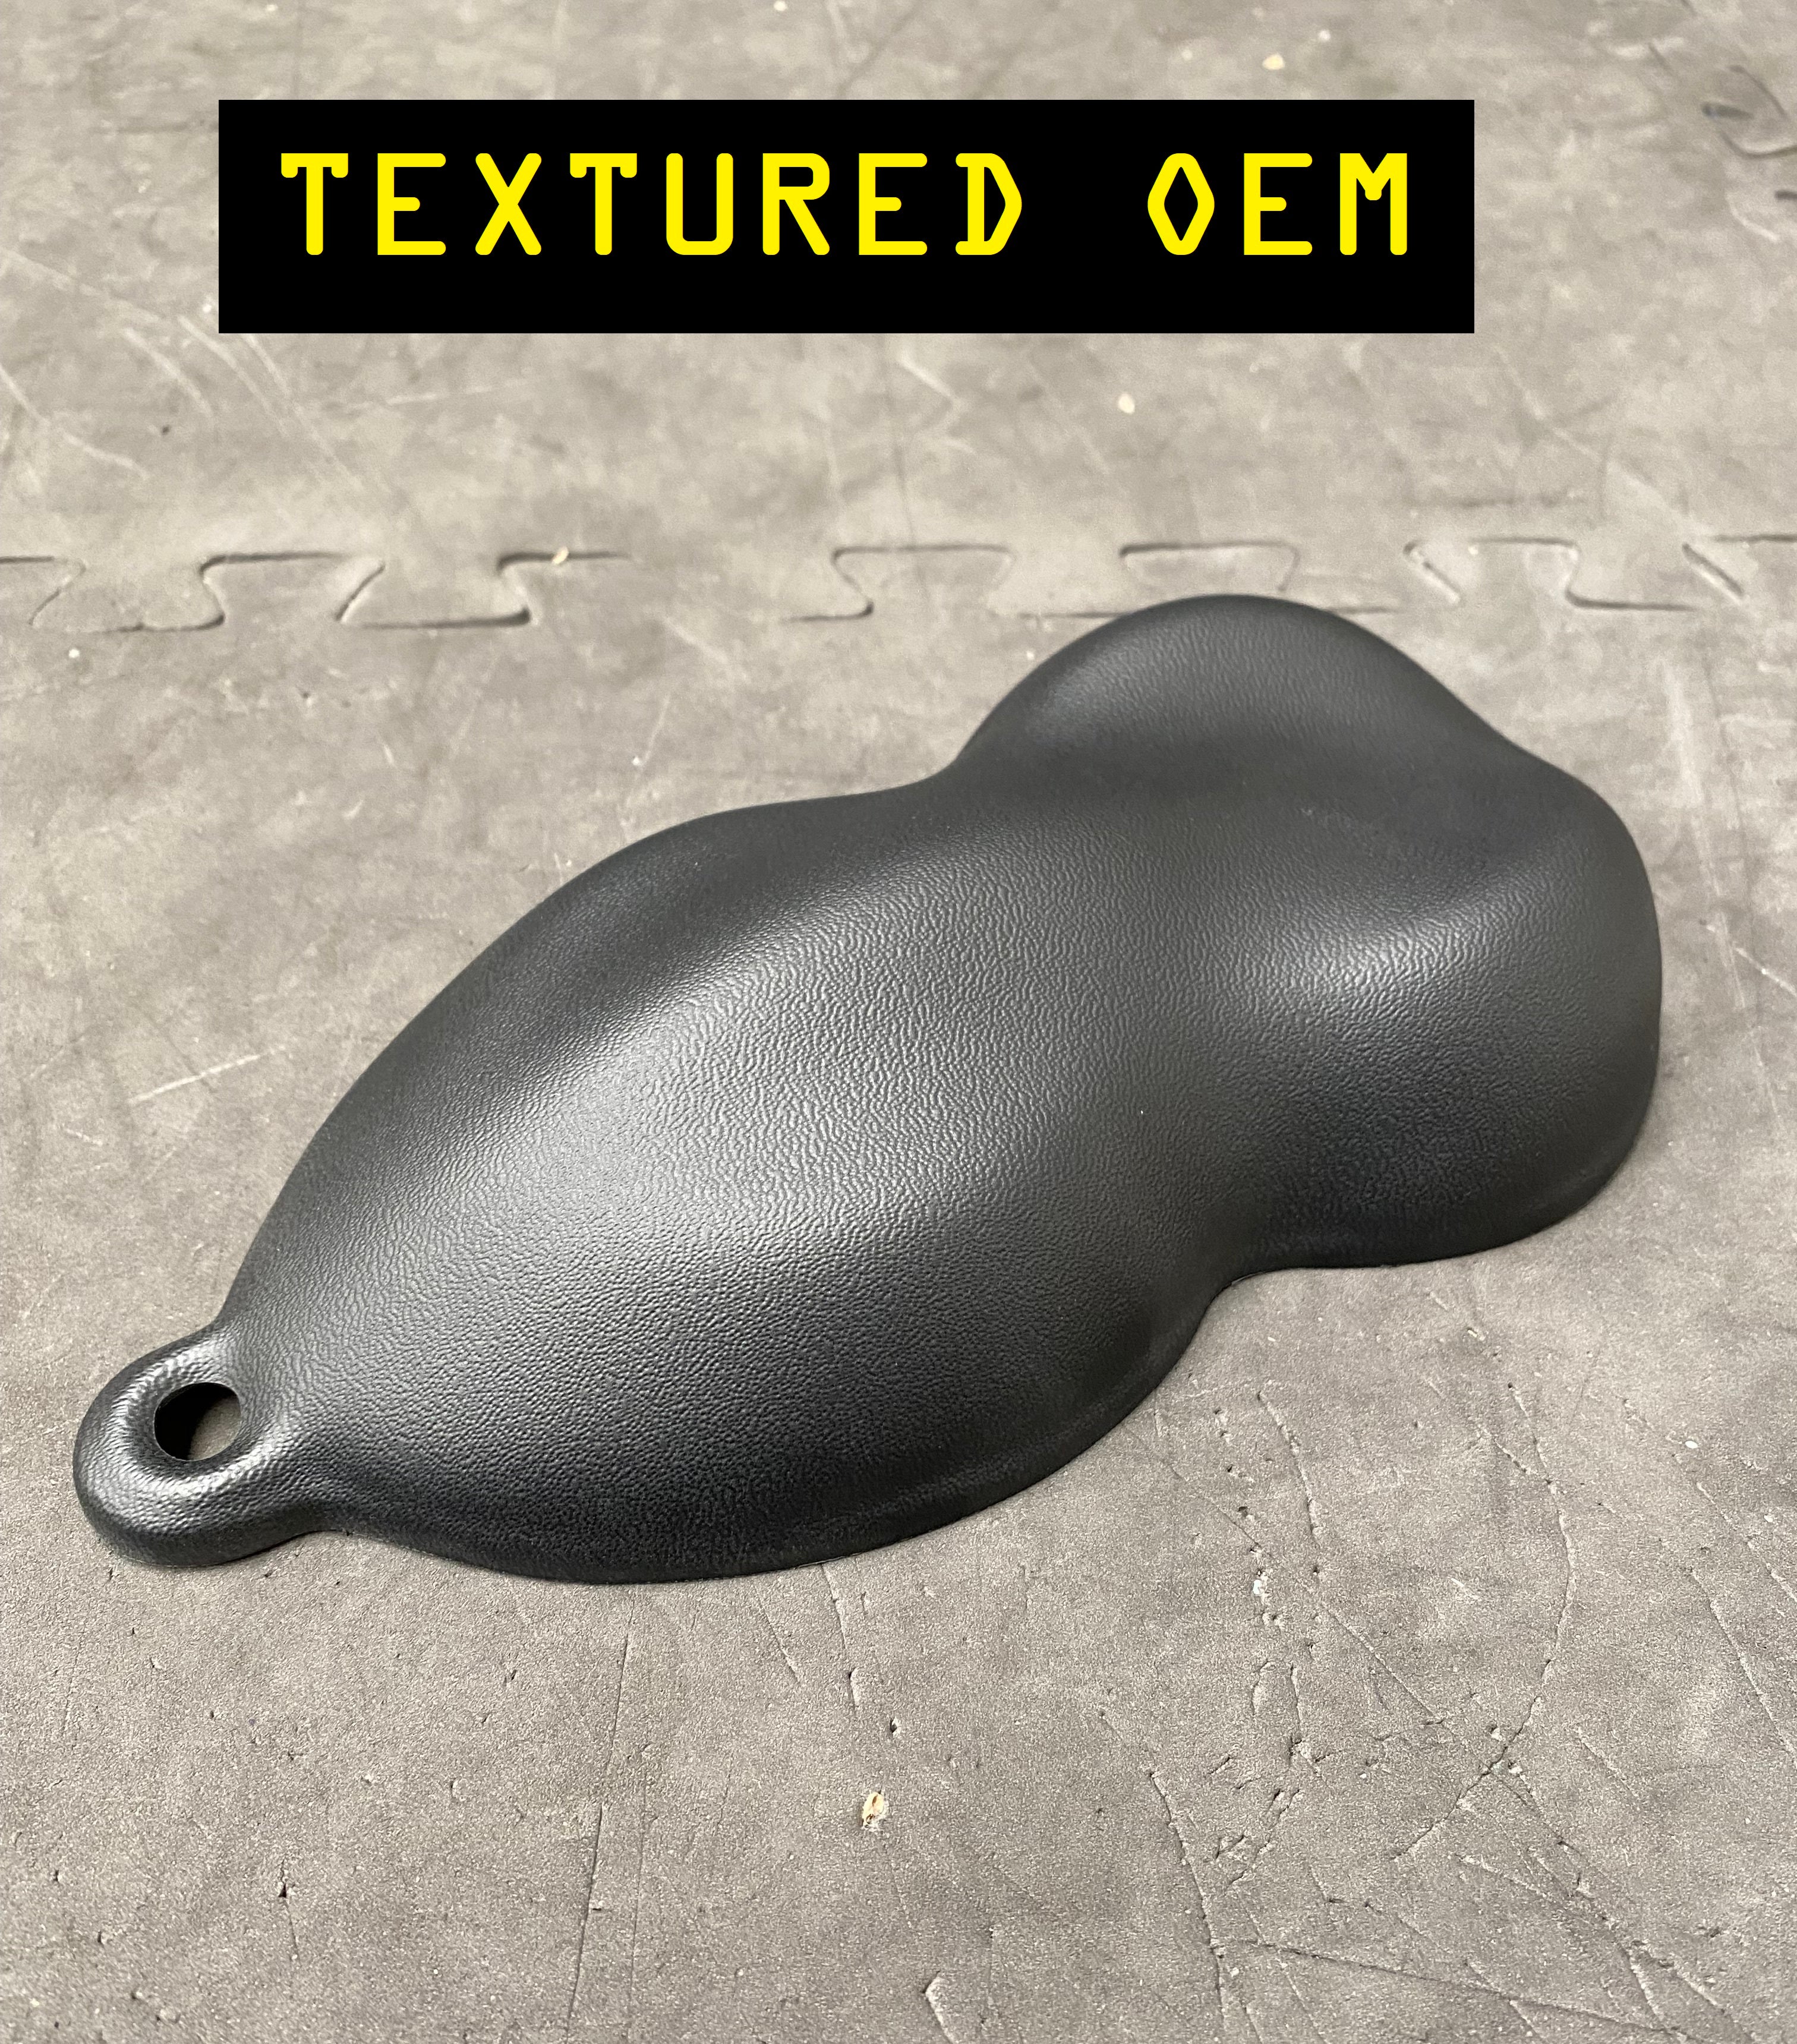 Proform Engine Oil Cap Cover - Vauxhall / Opel Corsa D inc VXR (Plastic Finishes)